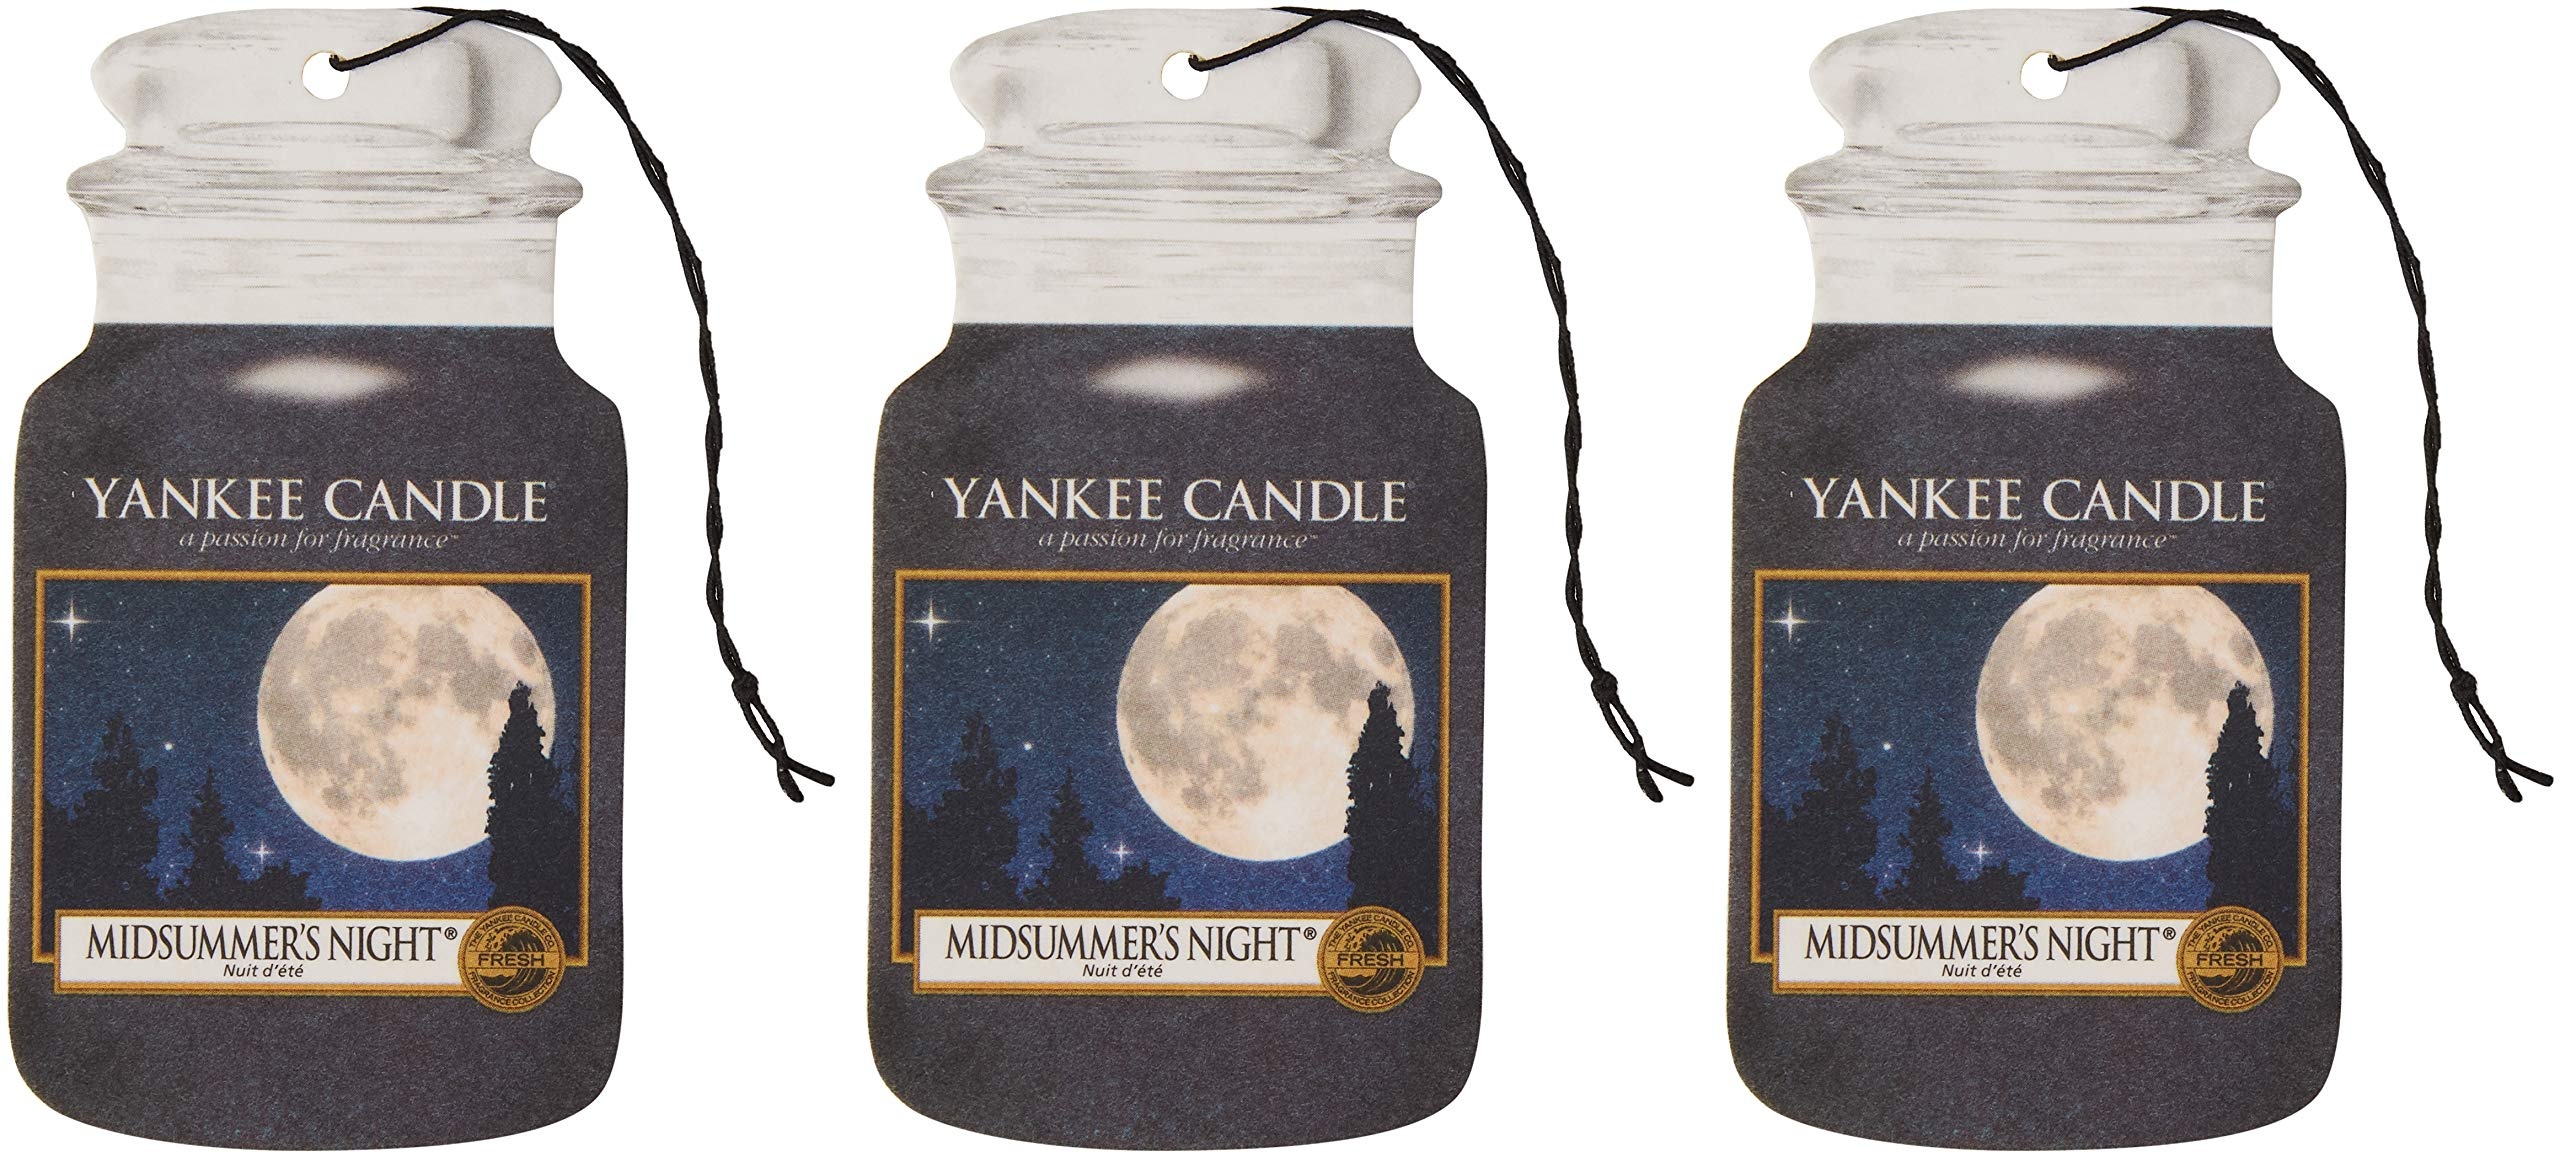 Yankee Candle Autoduft Car Jar Ultimate, bis zu 4 Wochen Duft, Midsummer’s Night, 3 Stück